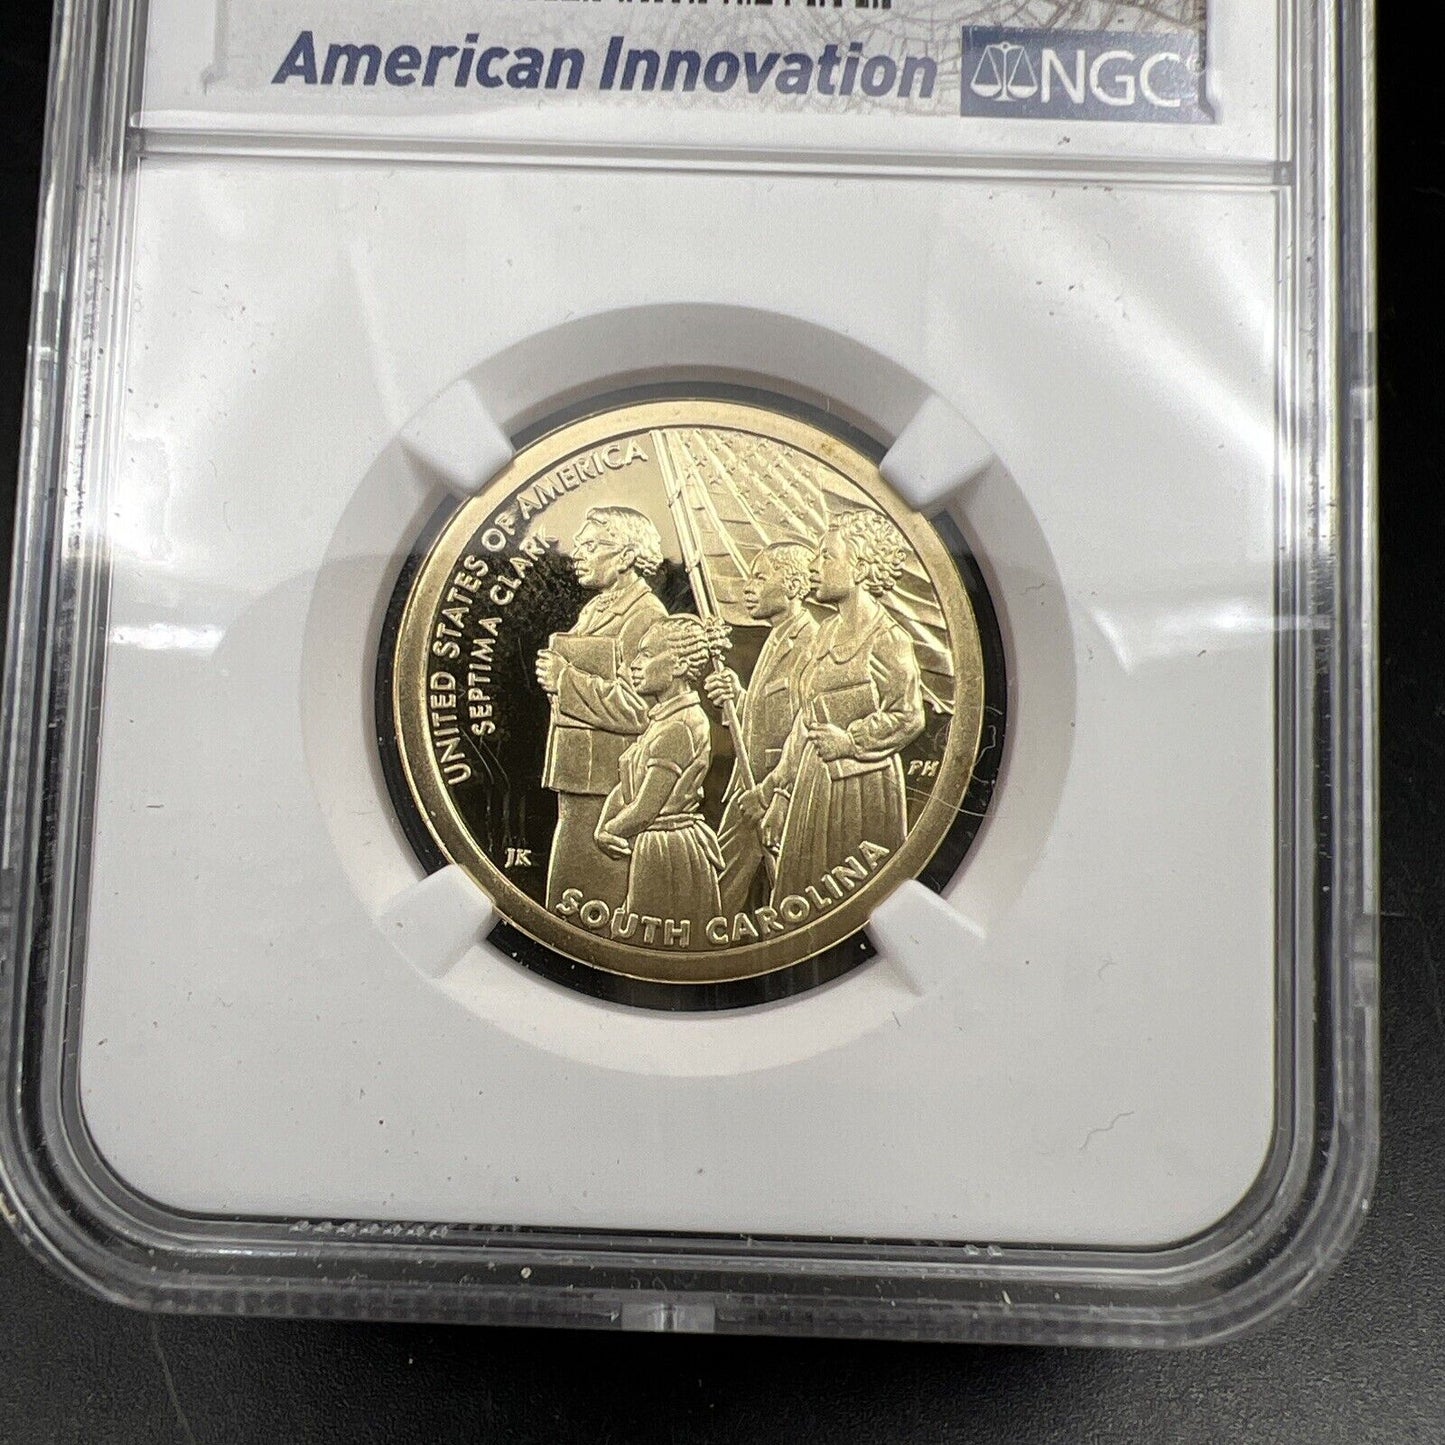 PF70 2020-S American Innovation Commemorative Dollar Septima Clark NGC UCAM #092